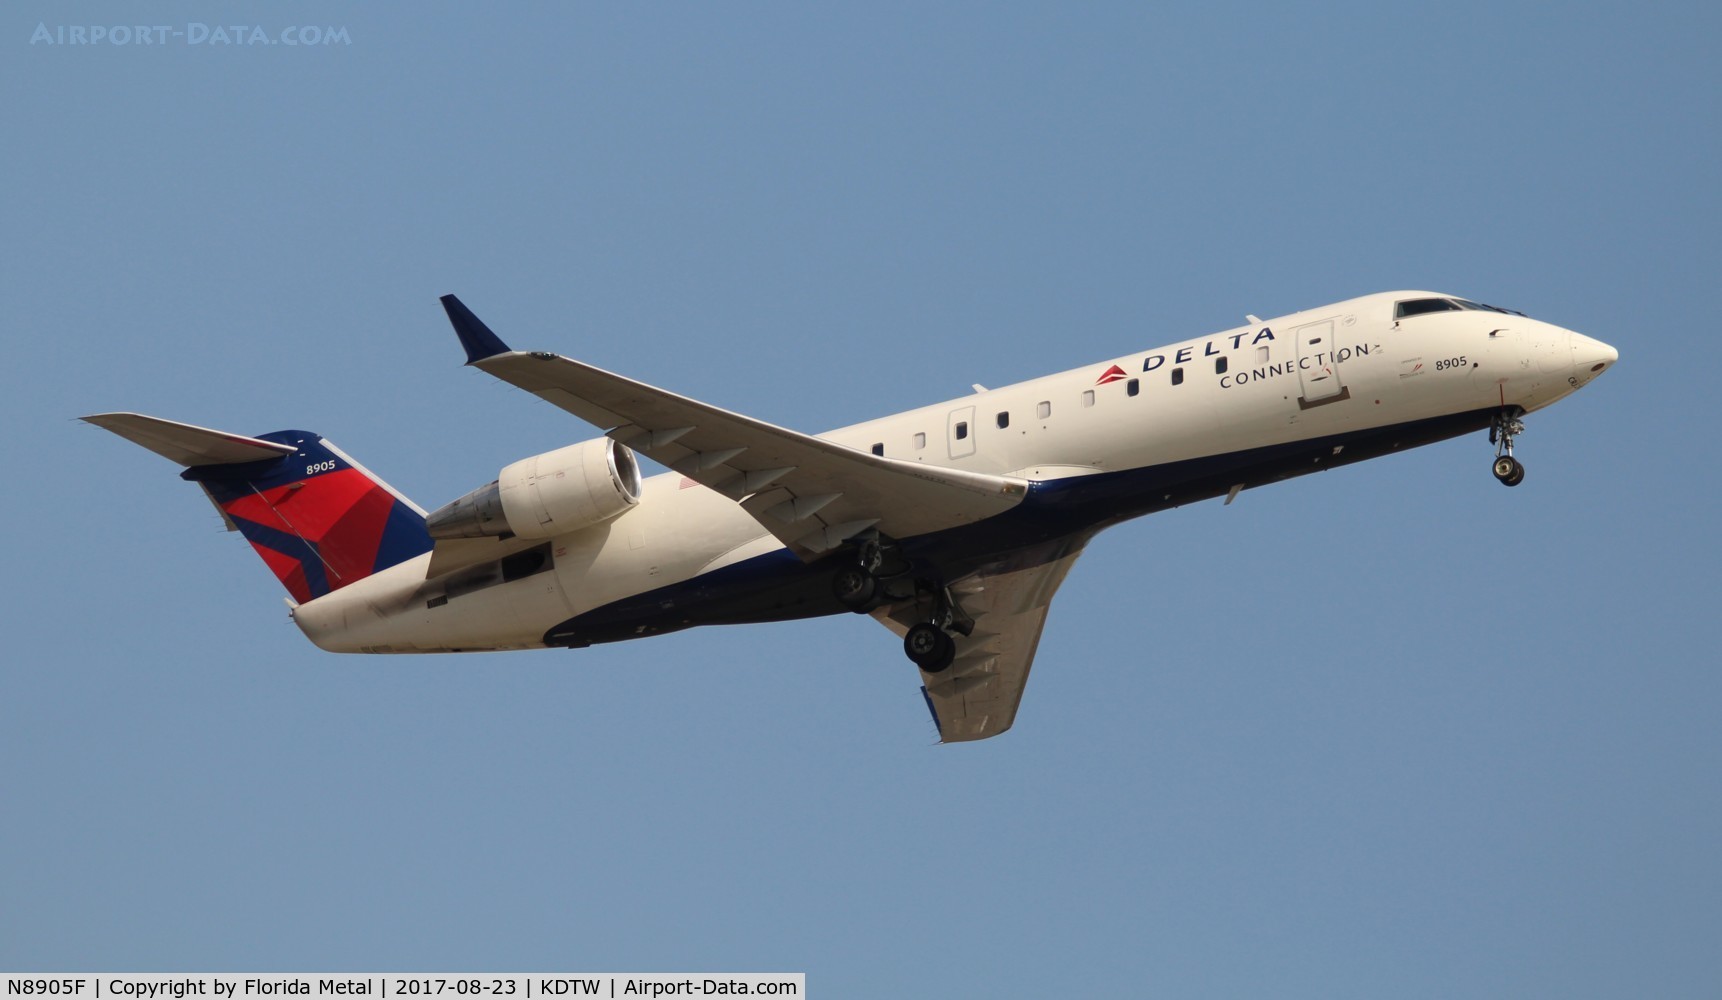 N8905F, 2004 Bombardier CRJ-200 (CL-600-2B19) C/N 7905, DTW spotting 2017